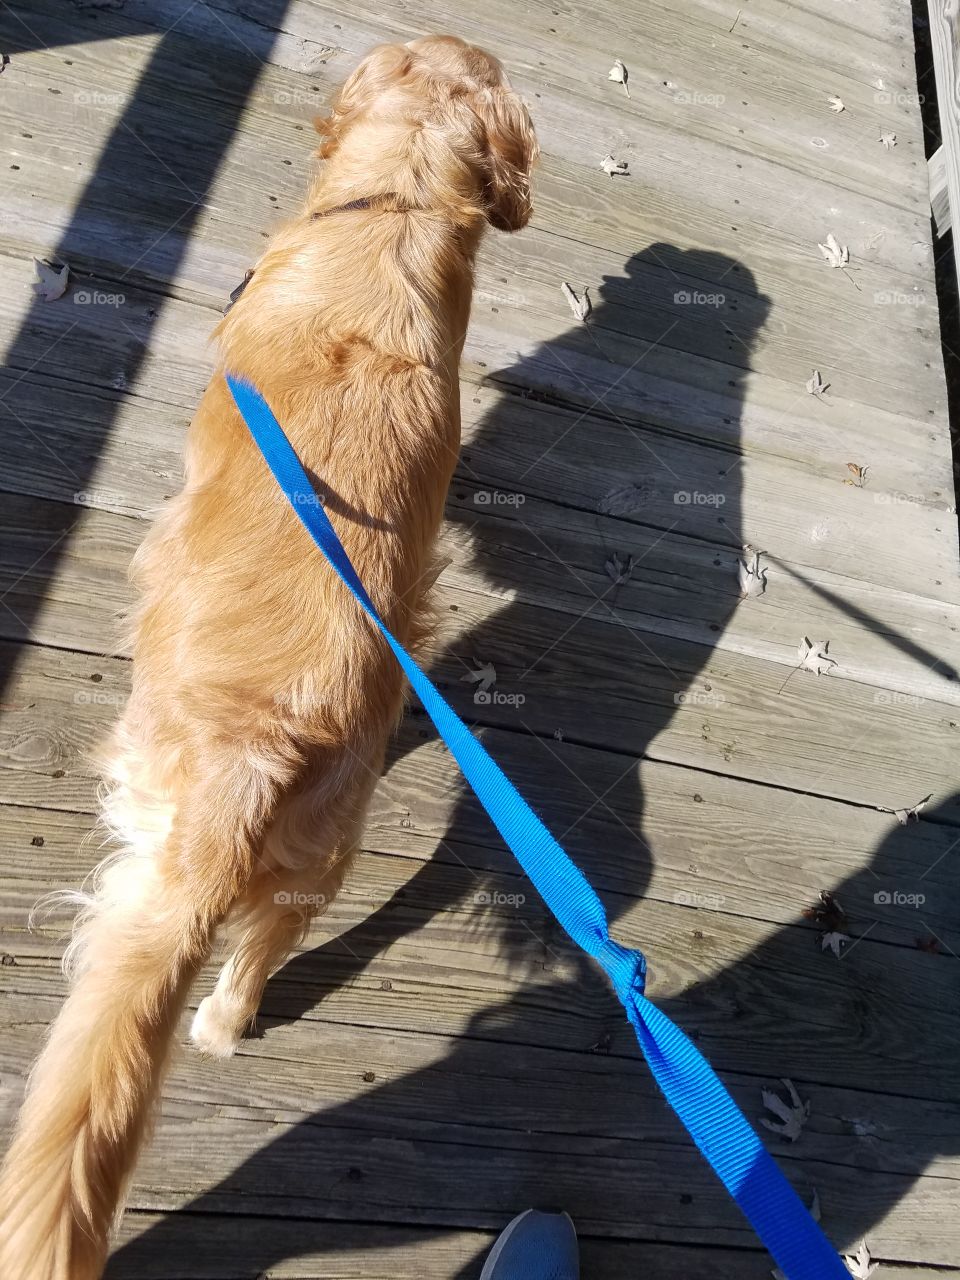 Buddy happily walking on his leash